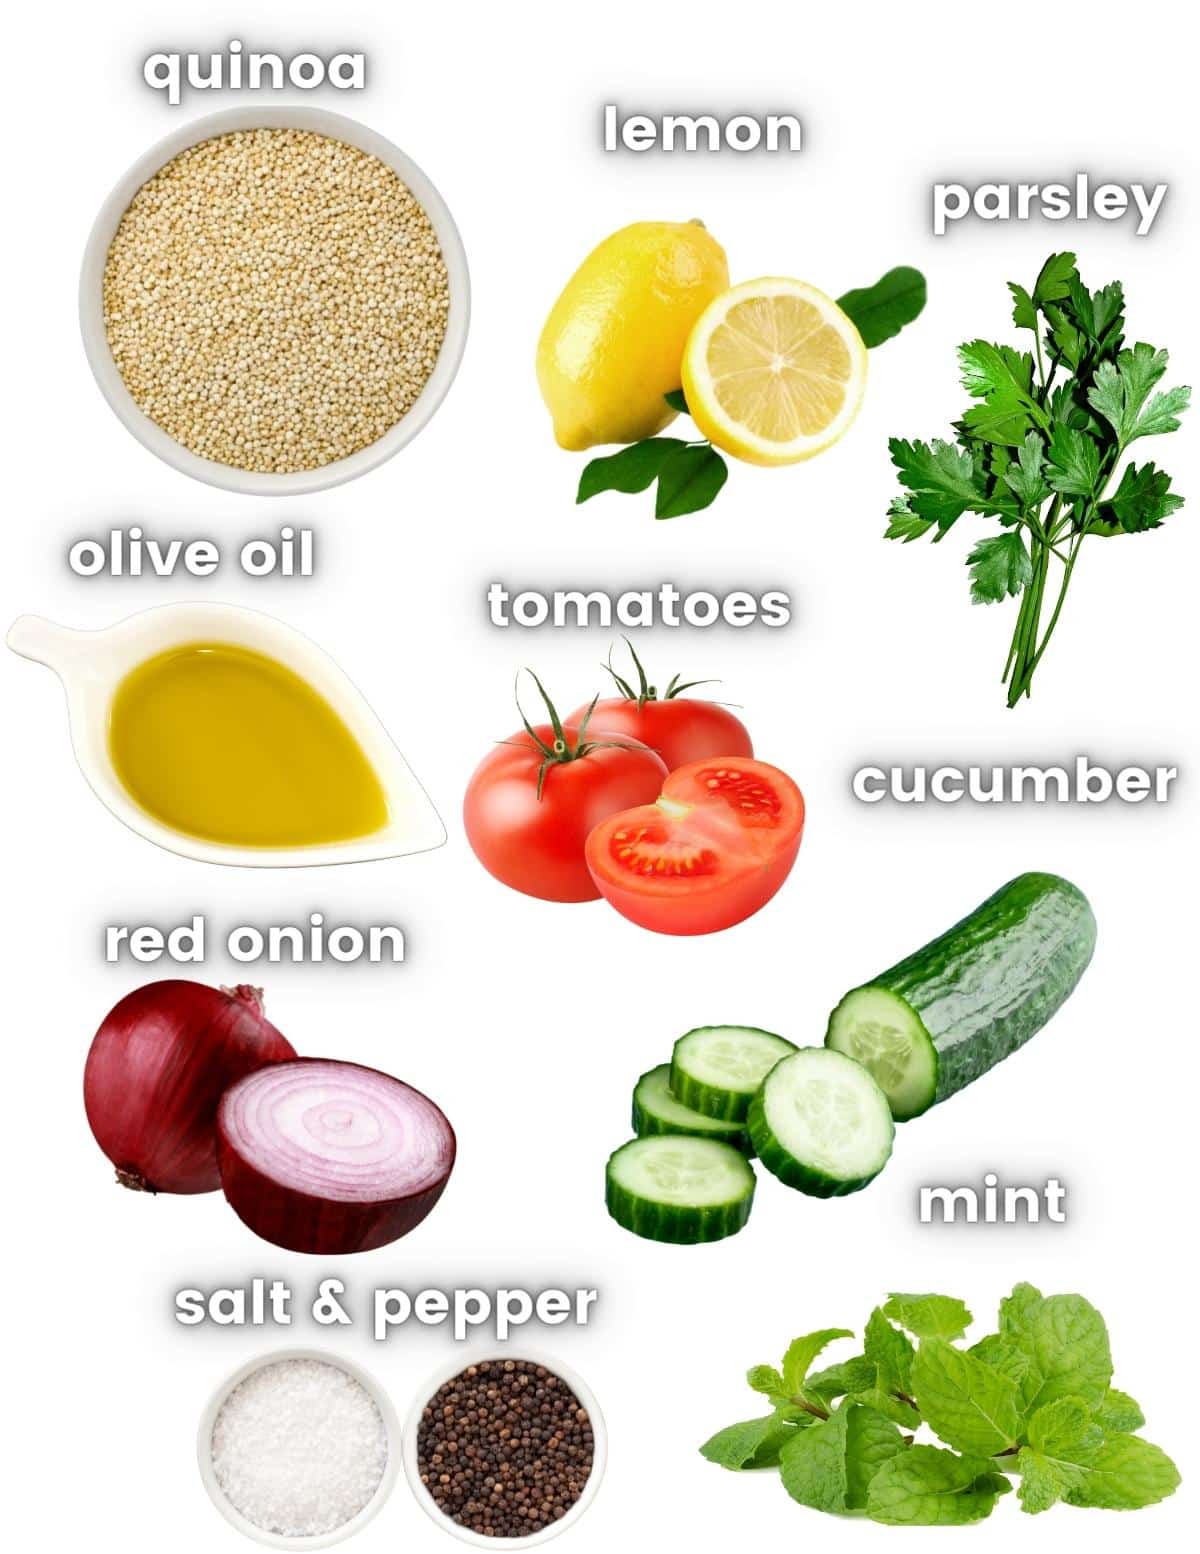 ingredients needed to make gluten-free quinoa tabbouleh